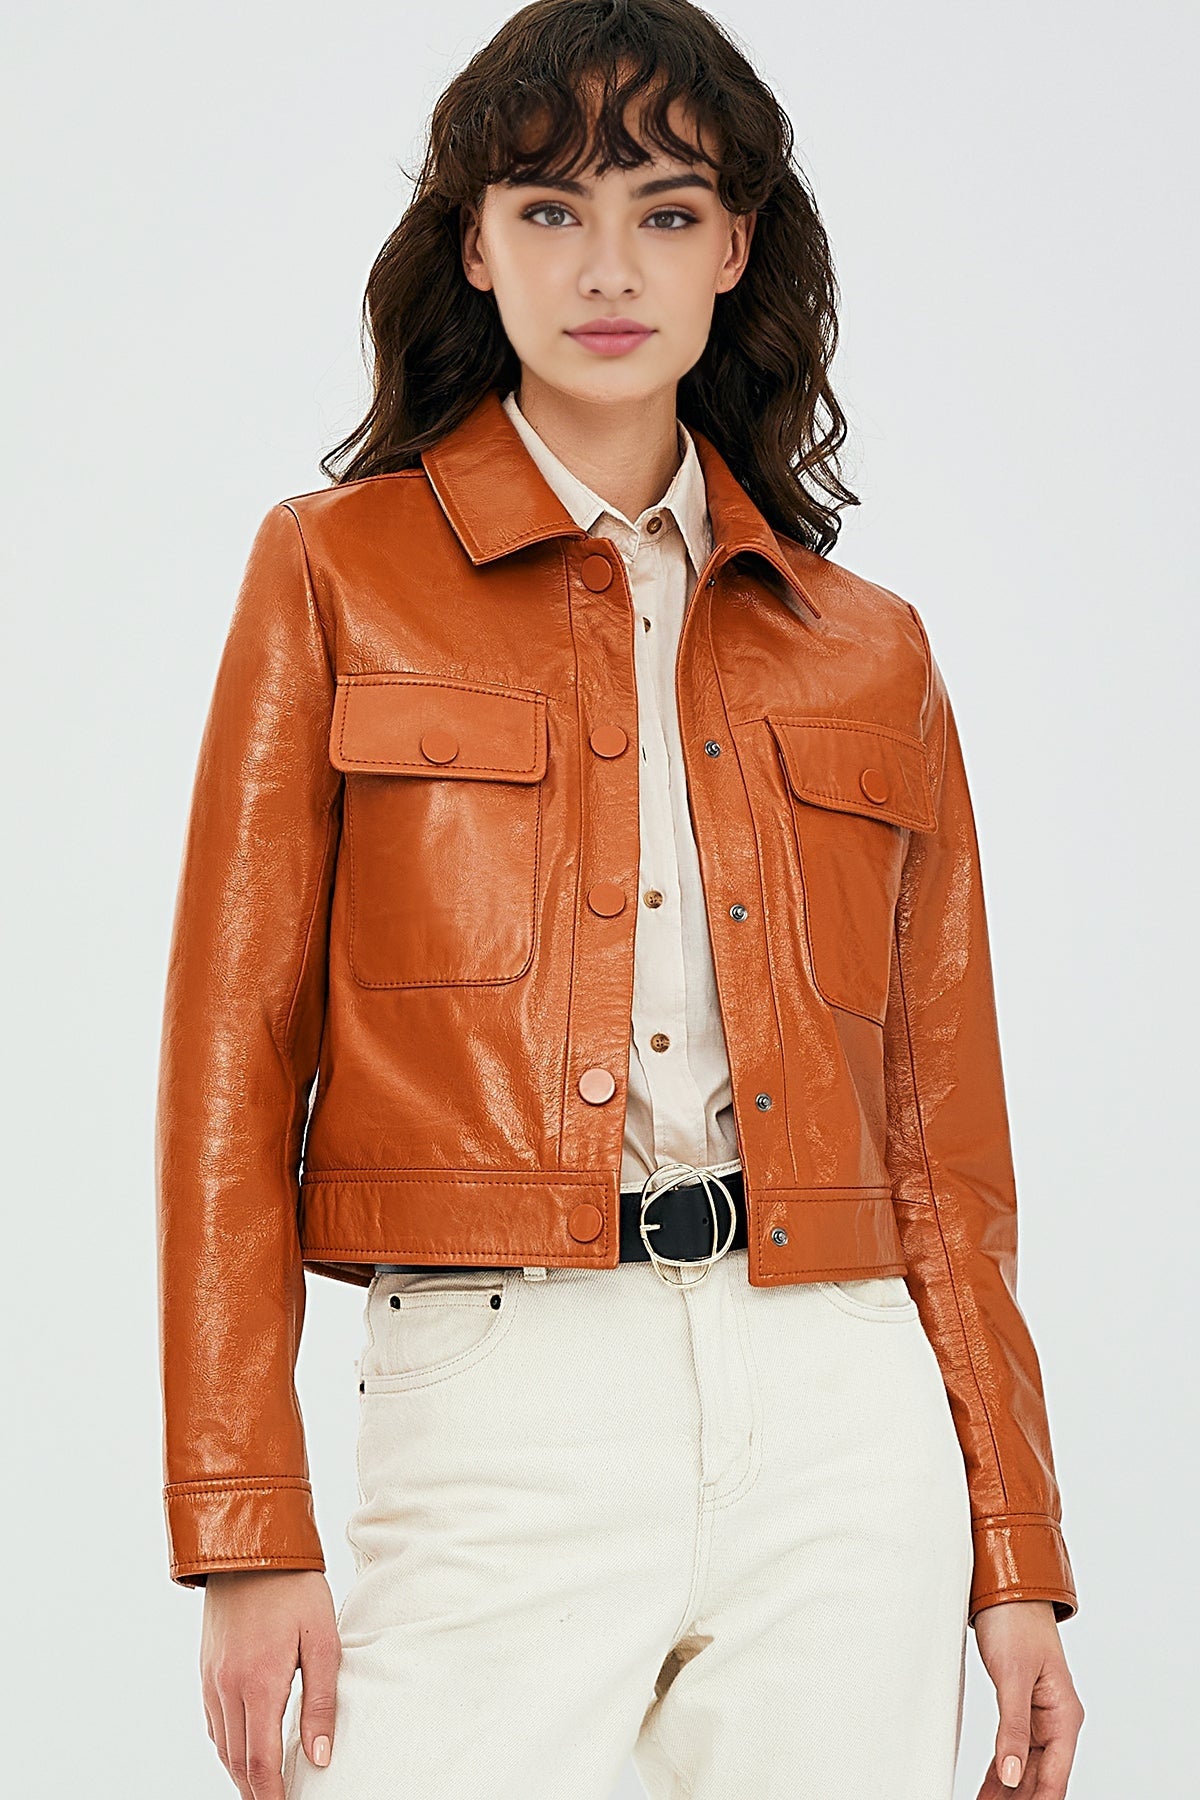 Emma Tile Women's Short Leather Jacket